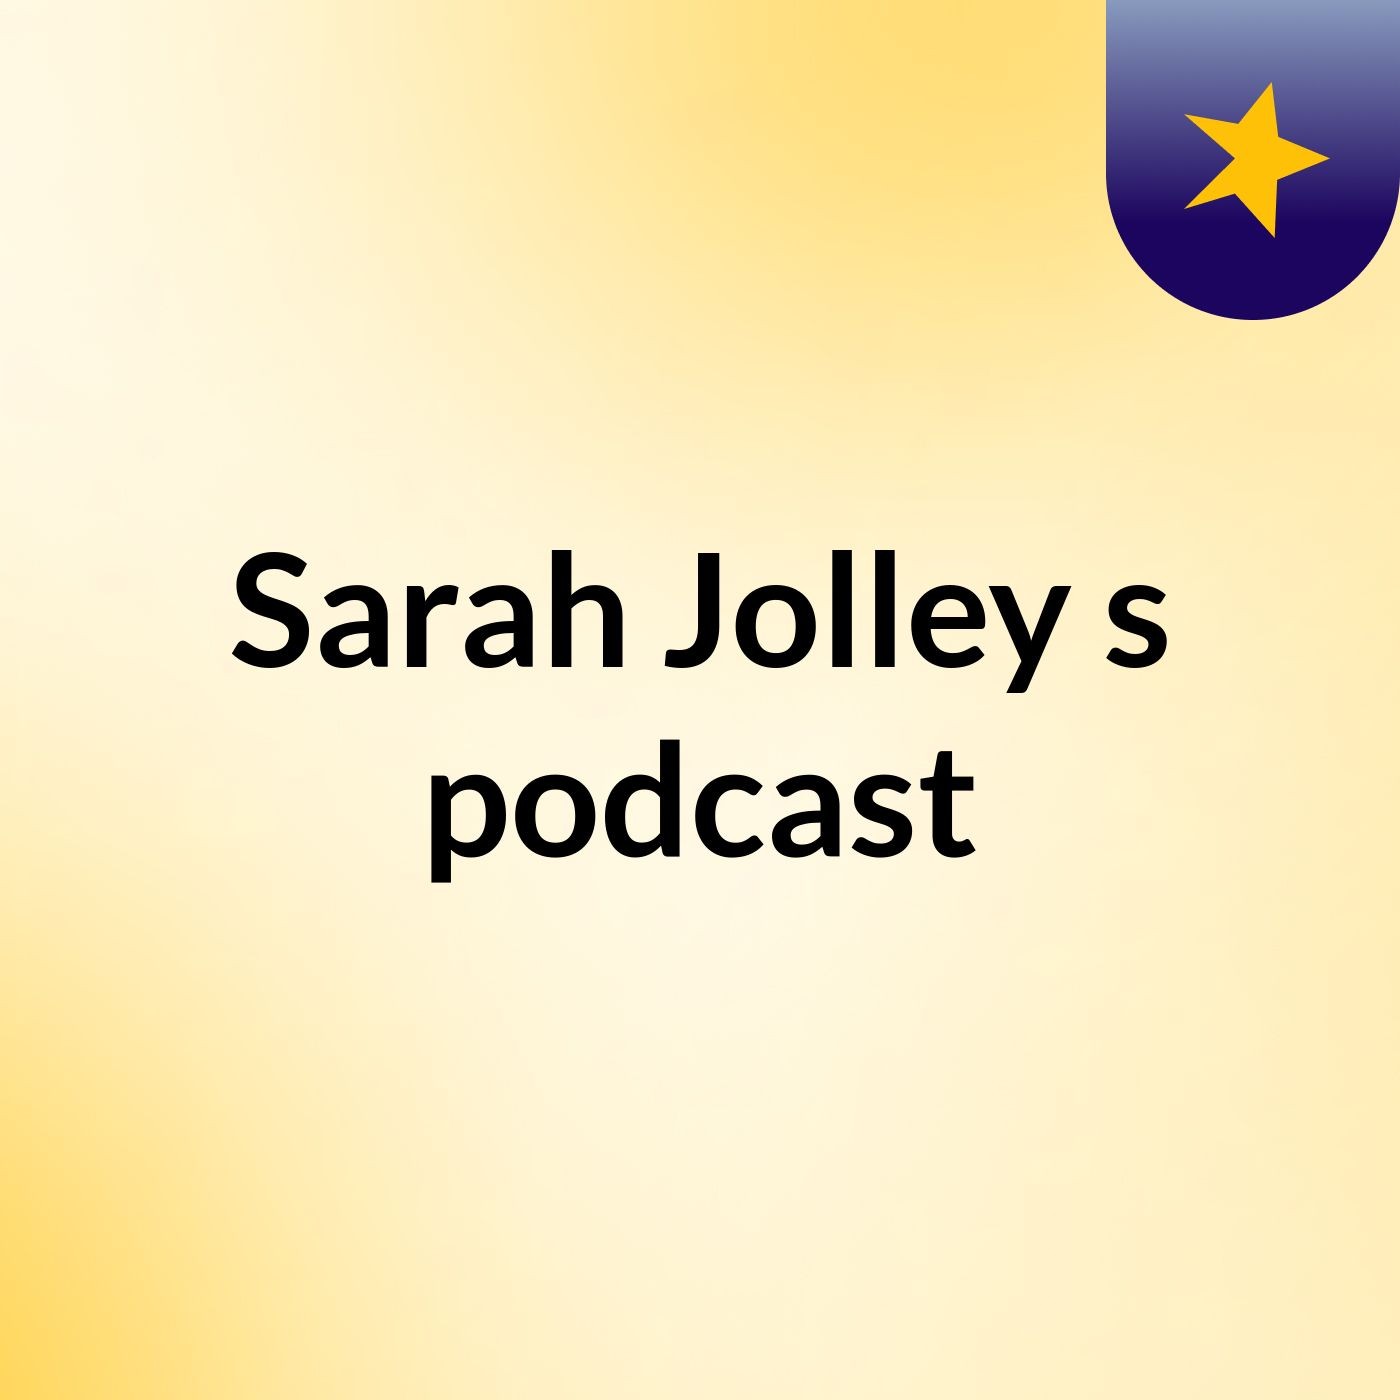 Sarah Jolley's podcast